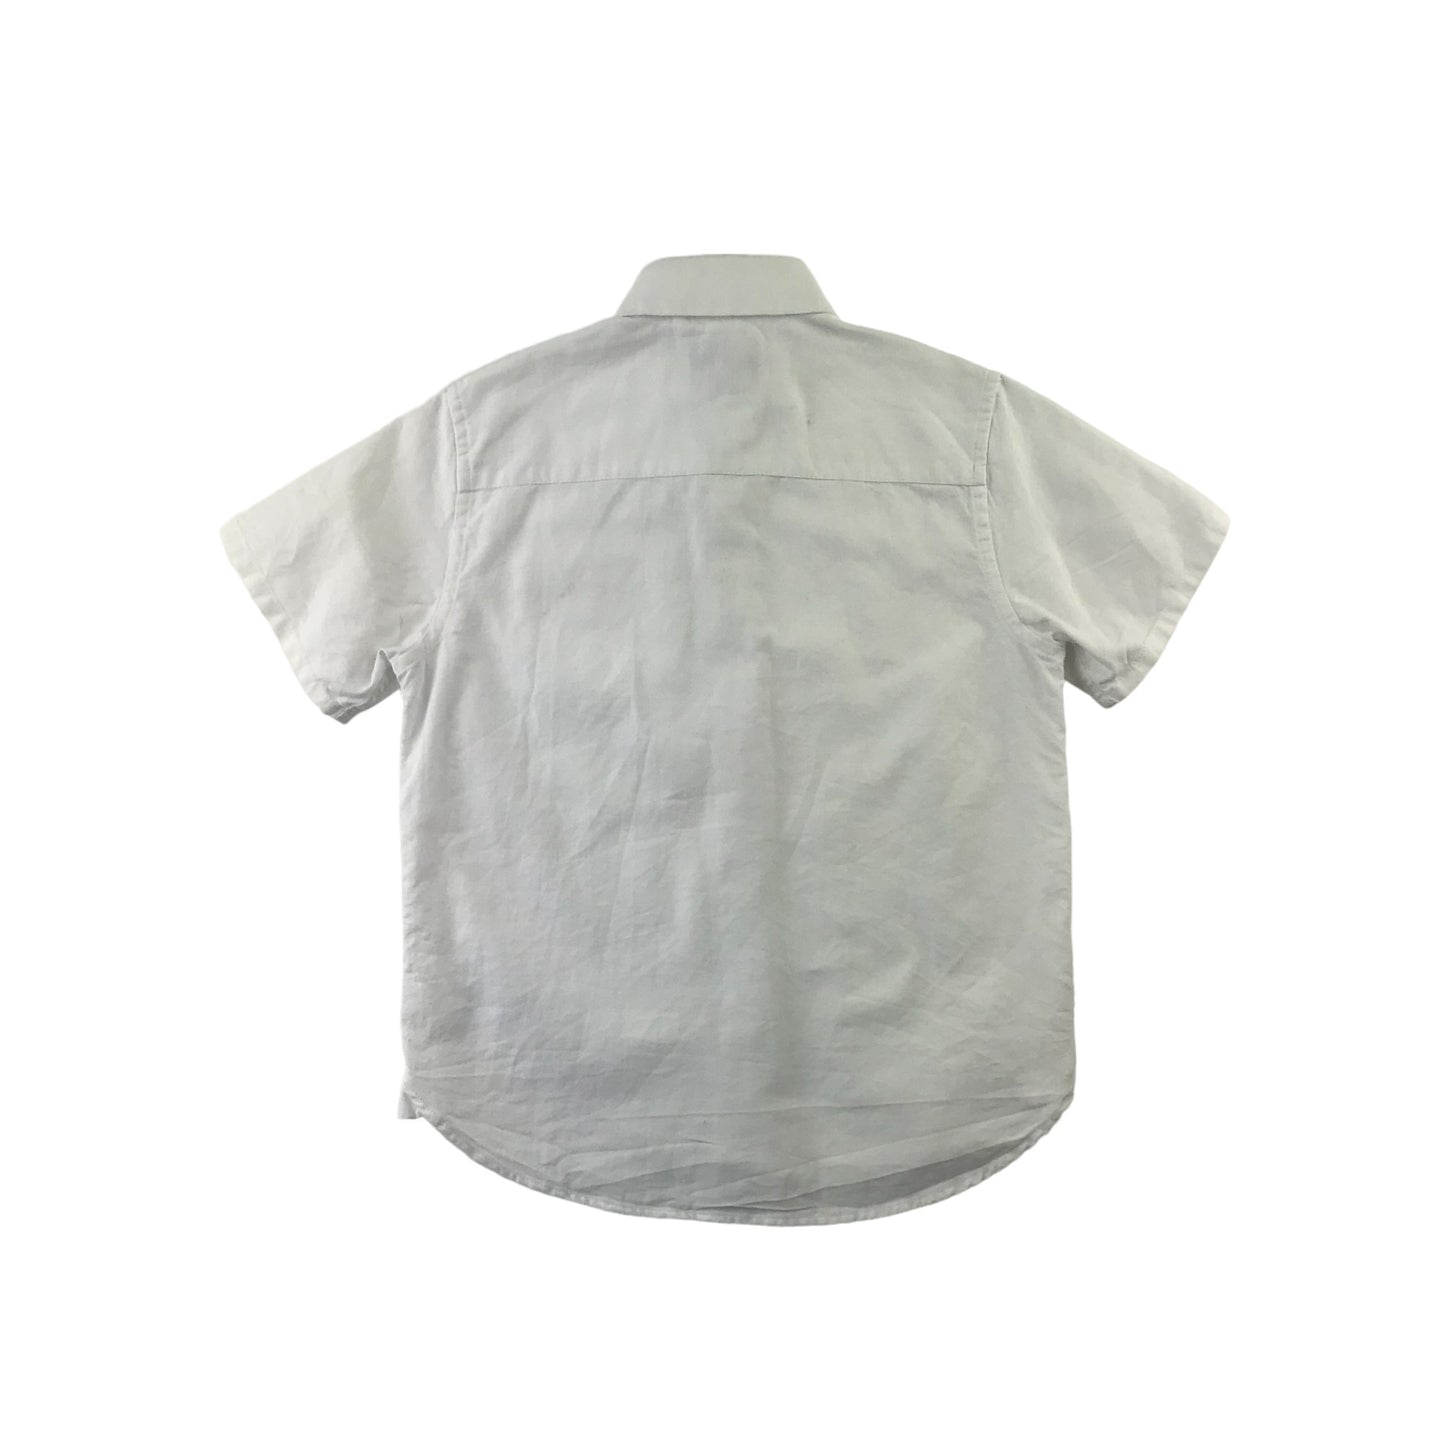 Next Shirt Age 7 White Plain Short Sleeve Button Up Cotton